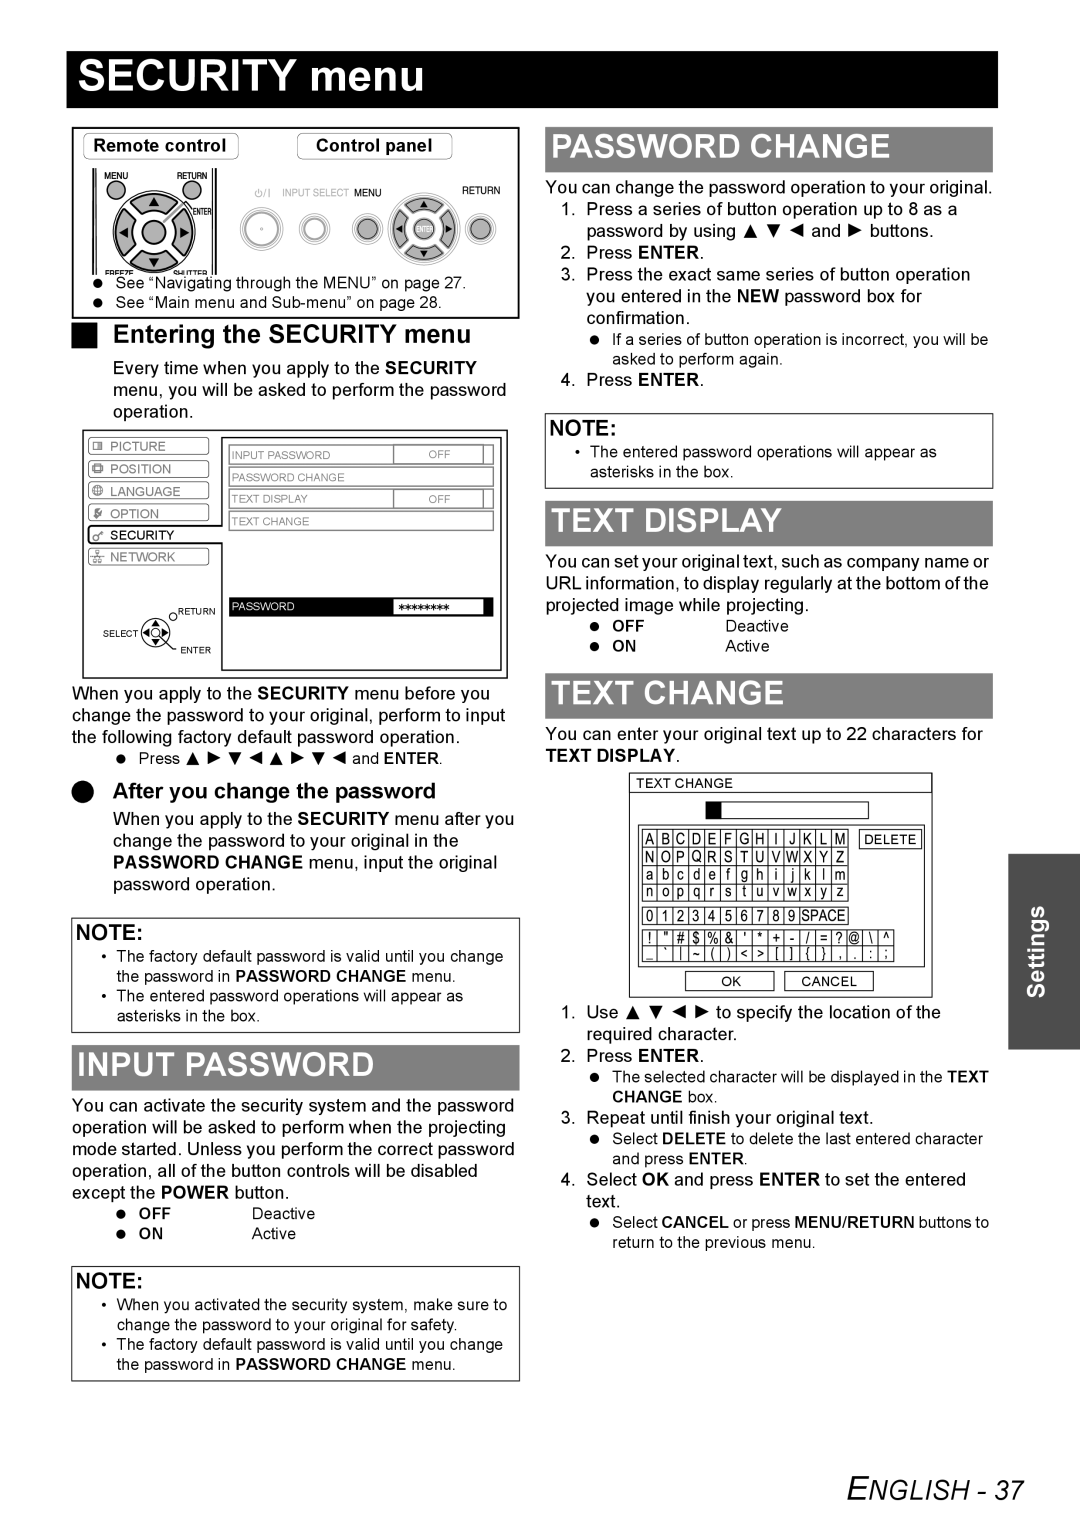 Philips PT-FW100NTU Input Password, Password Change, Text Display, Text Change, Entering the SECURITY menu, English 